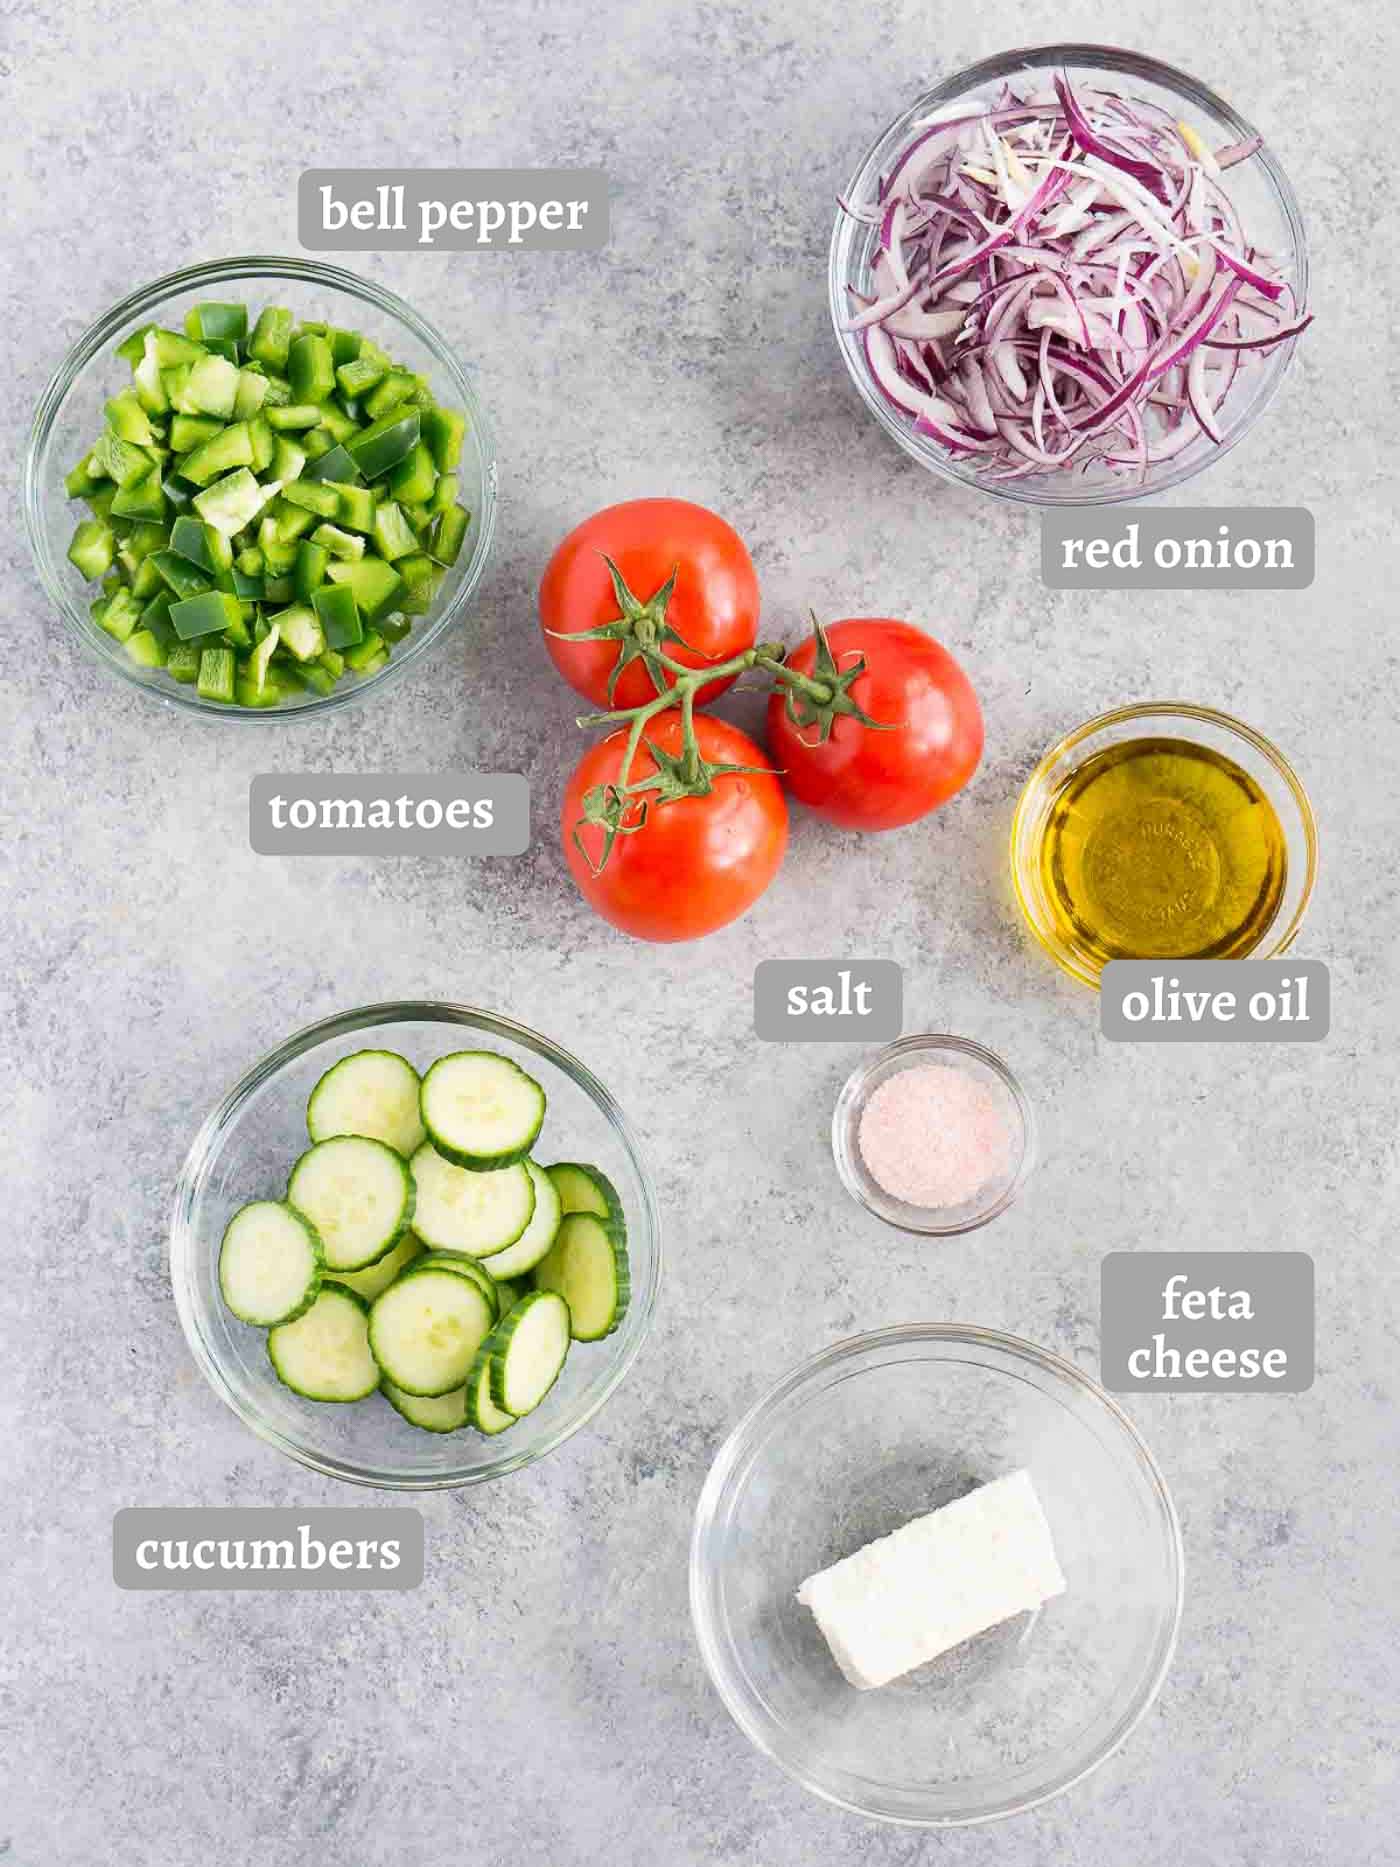 shopska salad ingredients